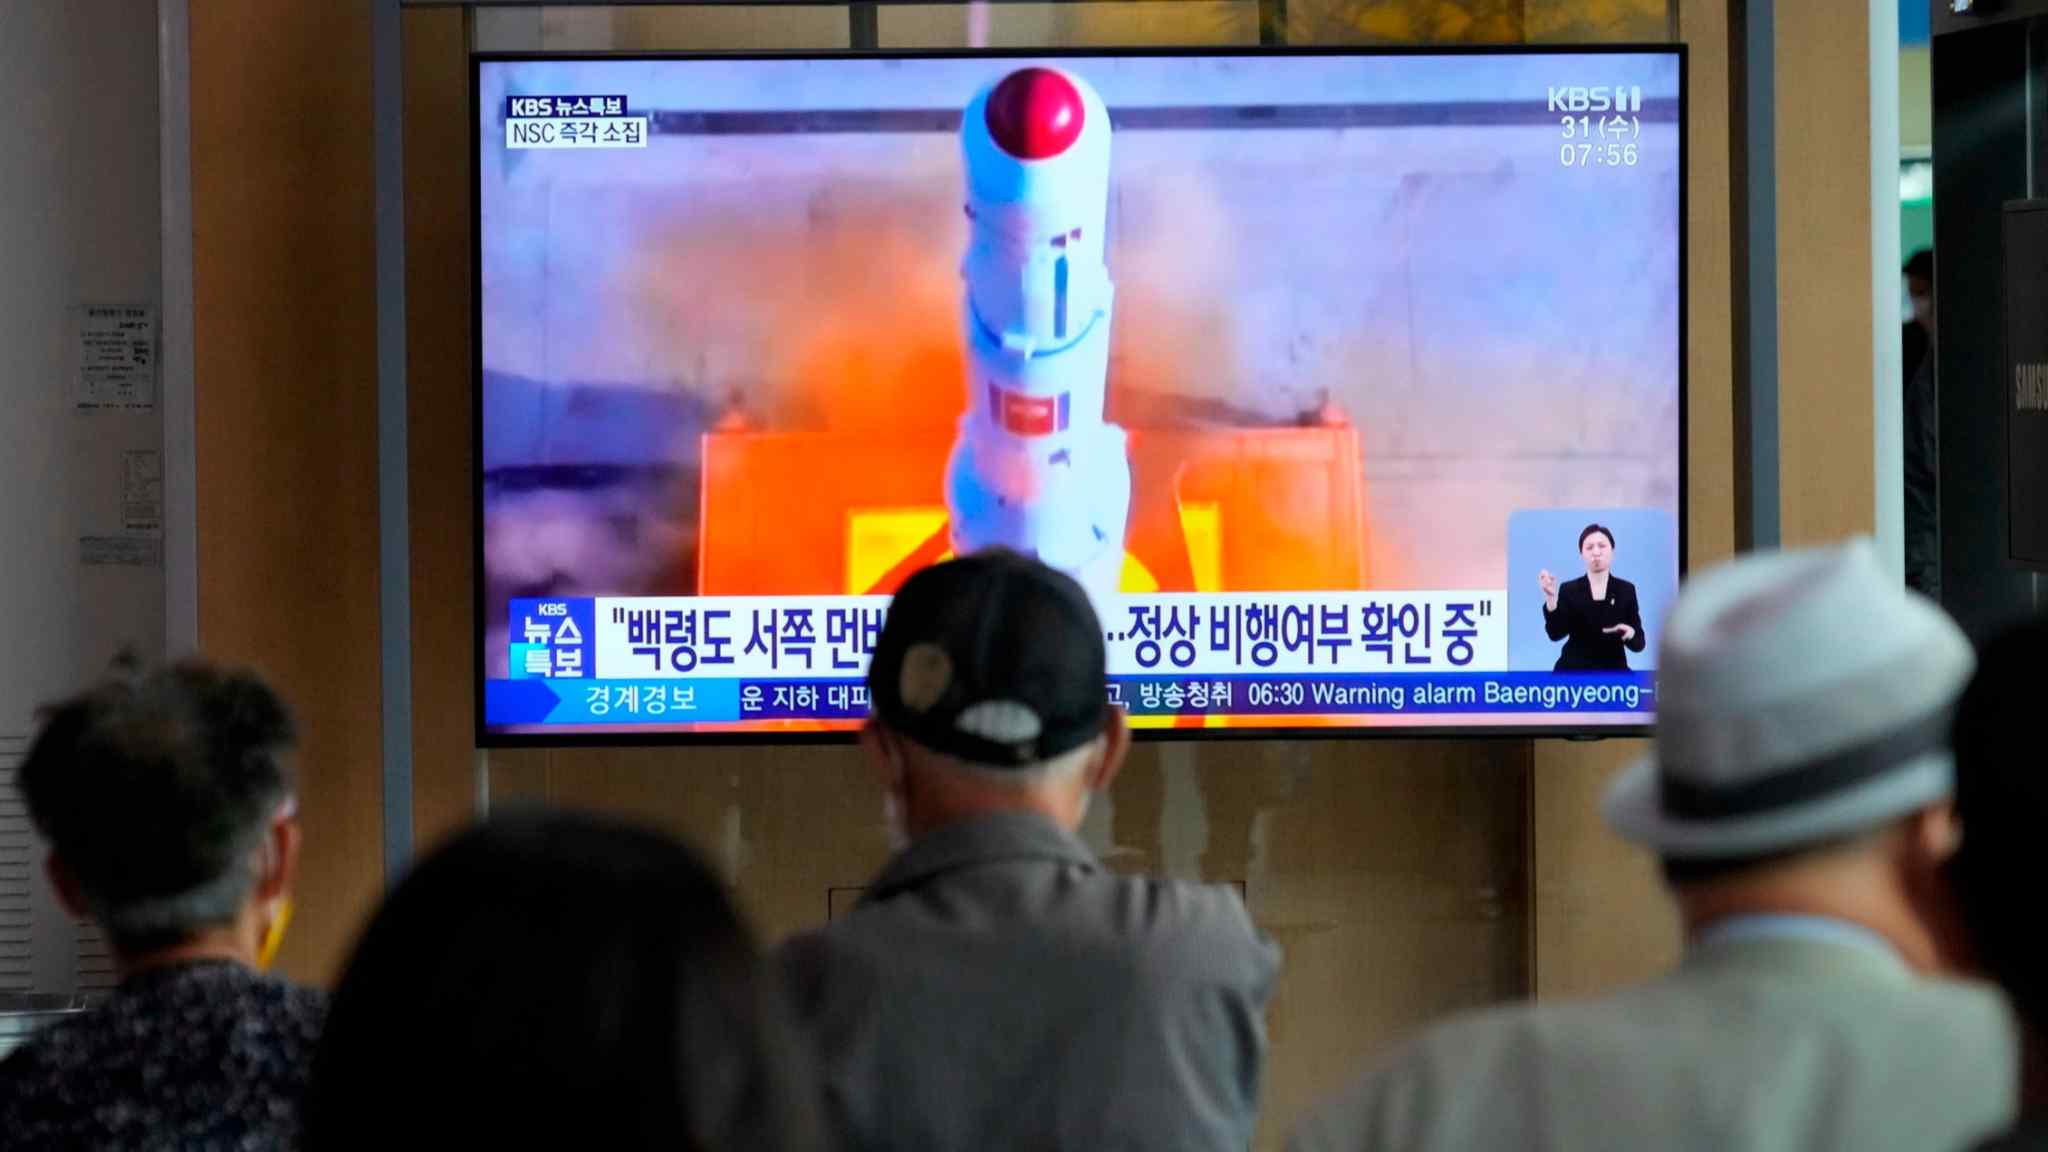 Seoul sends mistaken evacuation order after Pyongyang fires projectile